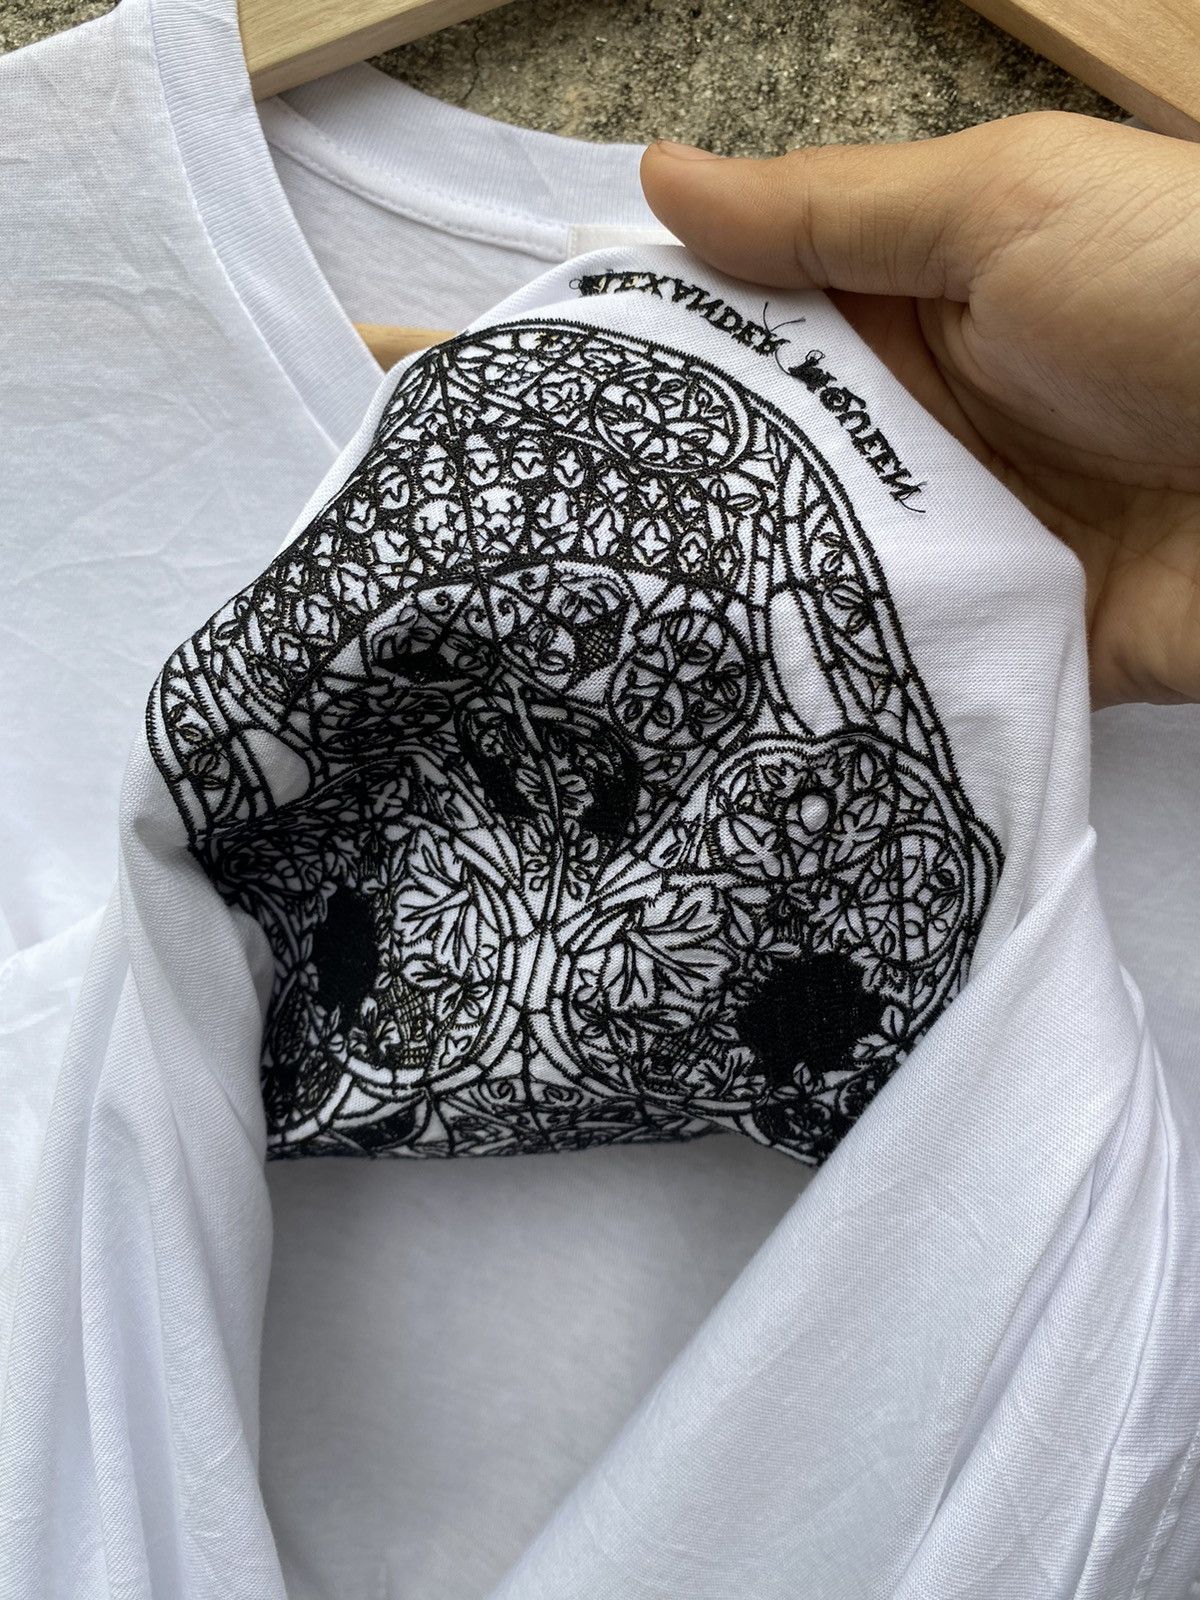 Alexander McQueen Skull Embroidered Tee White - 7